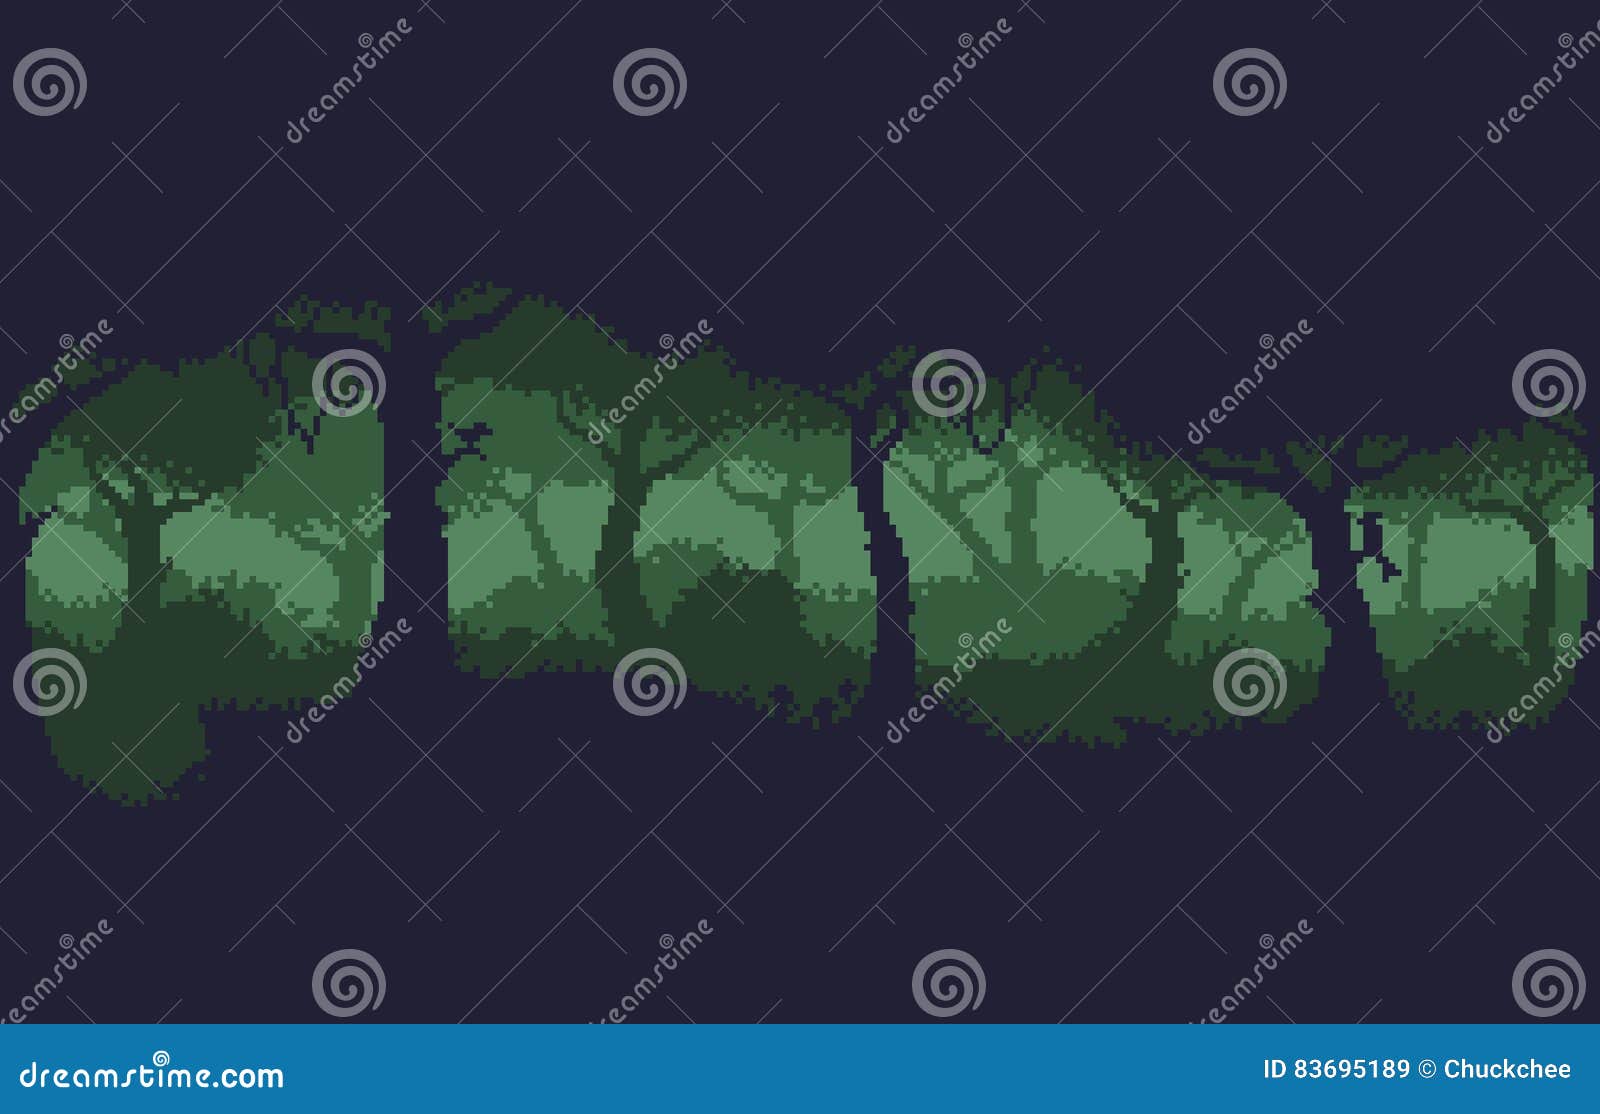 Pixel Art Forest Stock Vector Illustration Of Background 6951